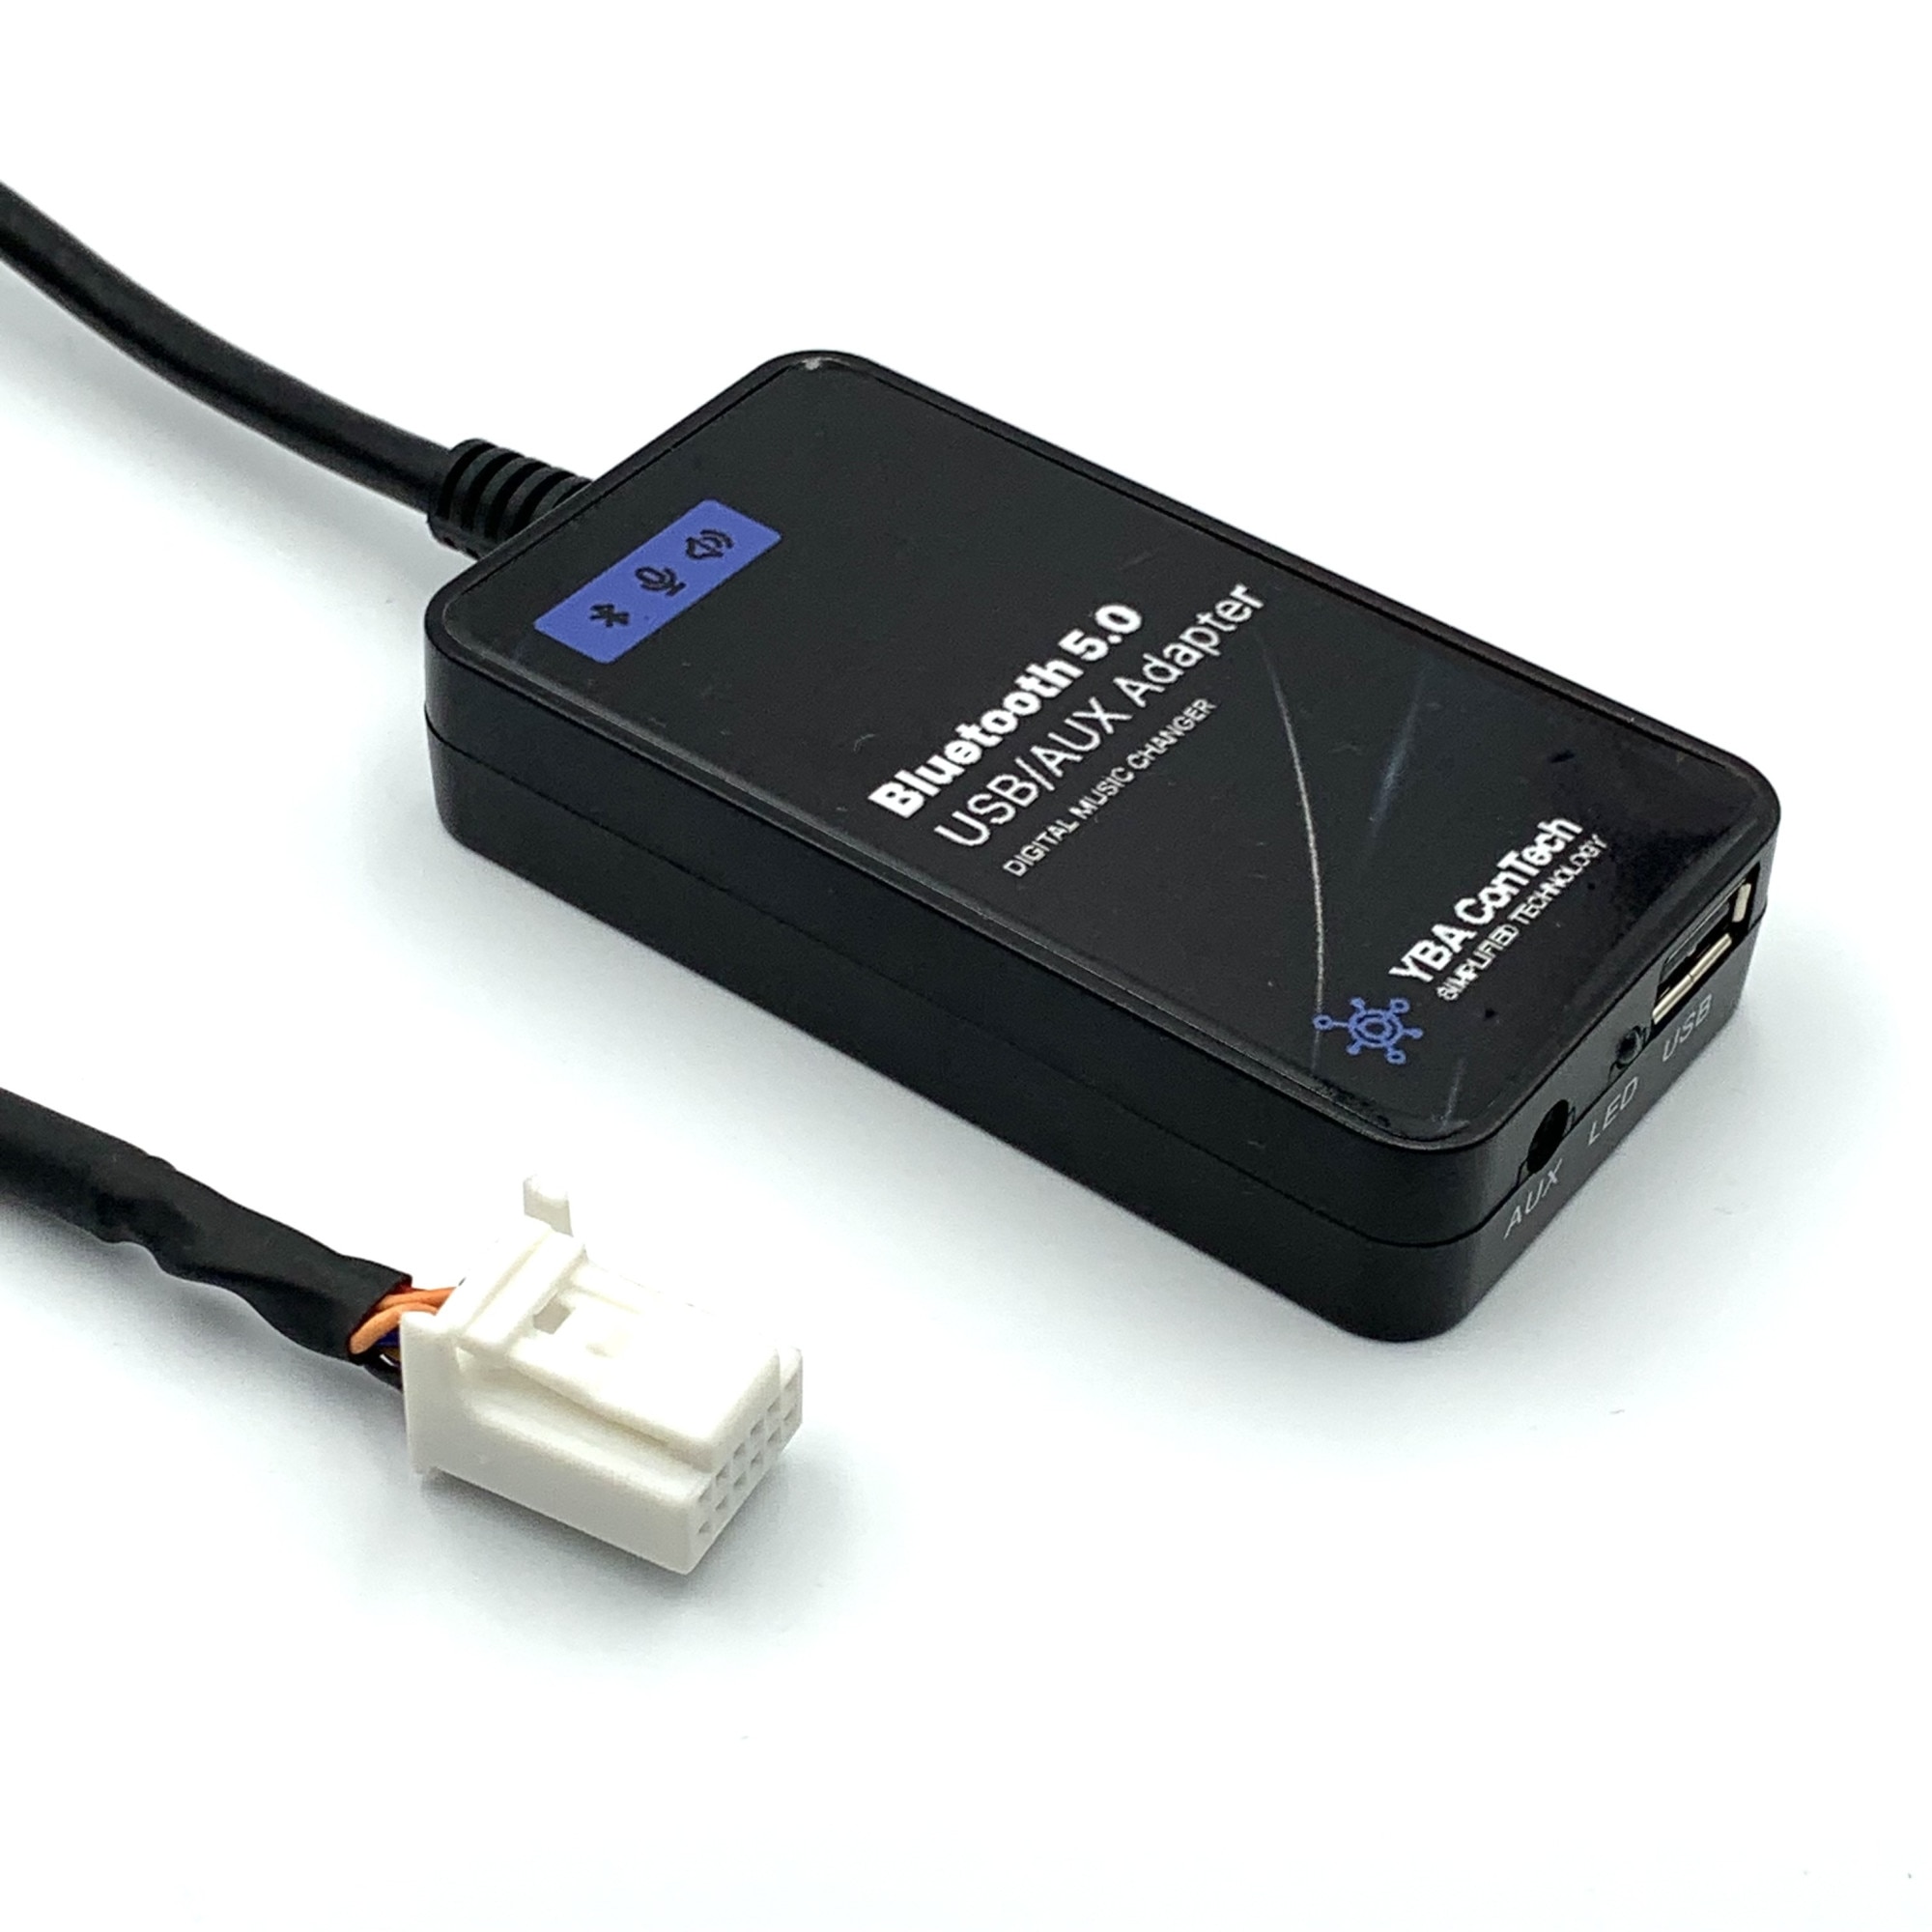 Bluetooth auto adapter za muziku mikrofon 12pin - Kablovi i konektori -  OLX.ba